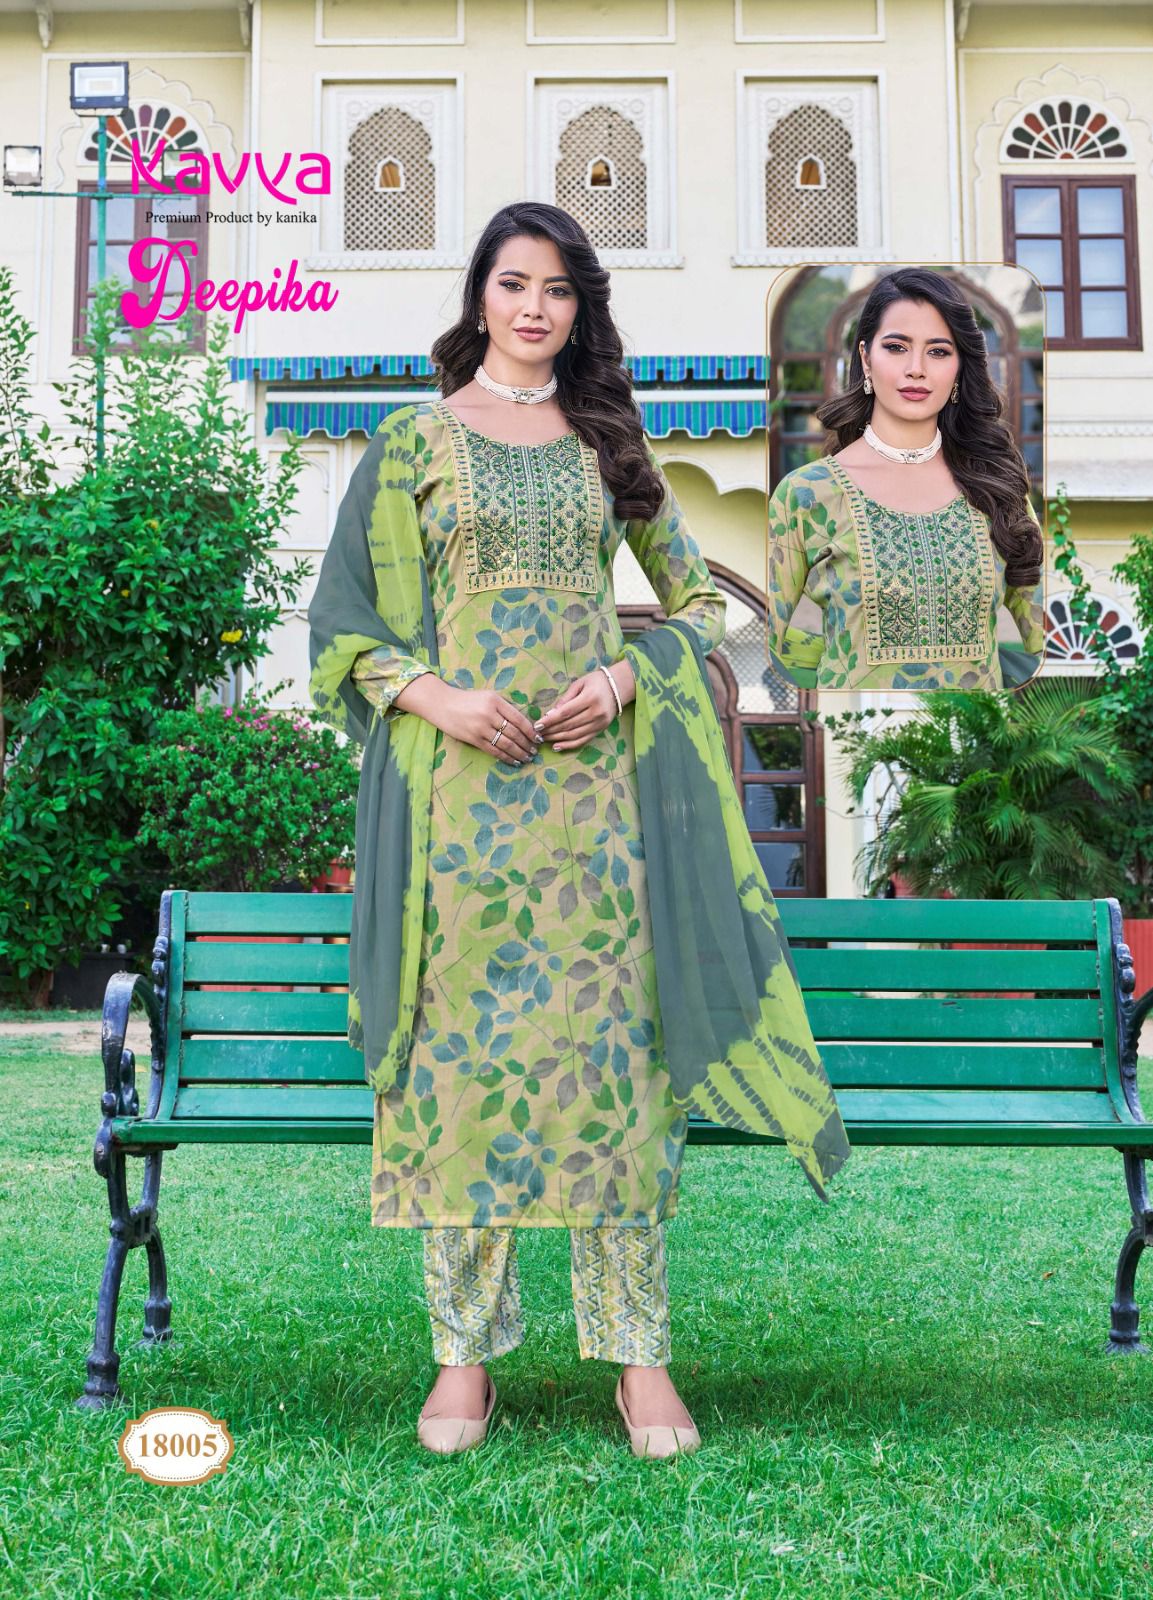 Deepika Vol 18 Kavya Capsule Readymade Pant Style Suits Exporter India